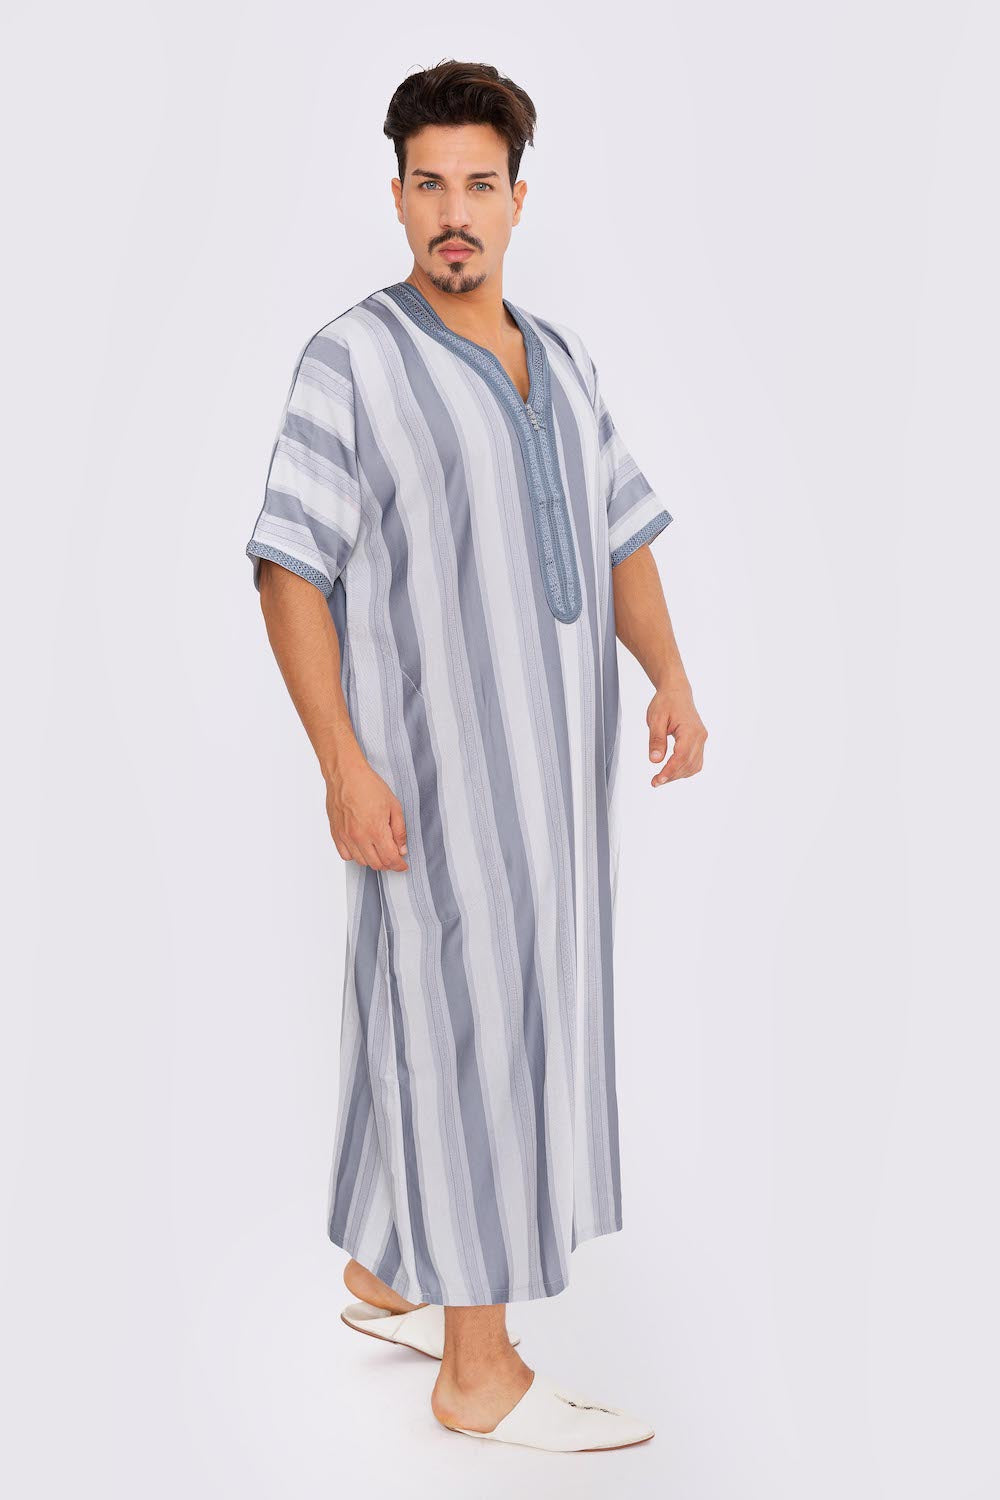 Gandoura Men's Short Sleeve Long Striped Thobe in Grey